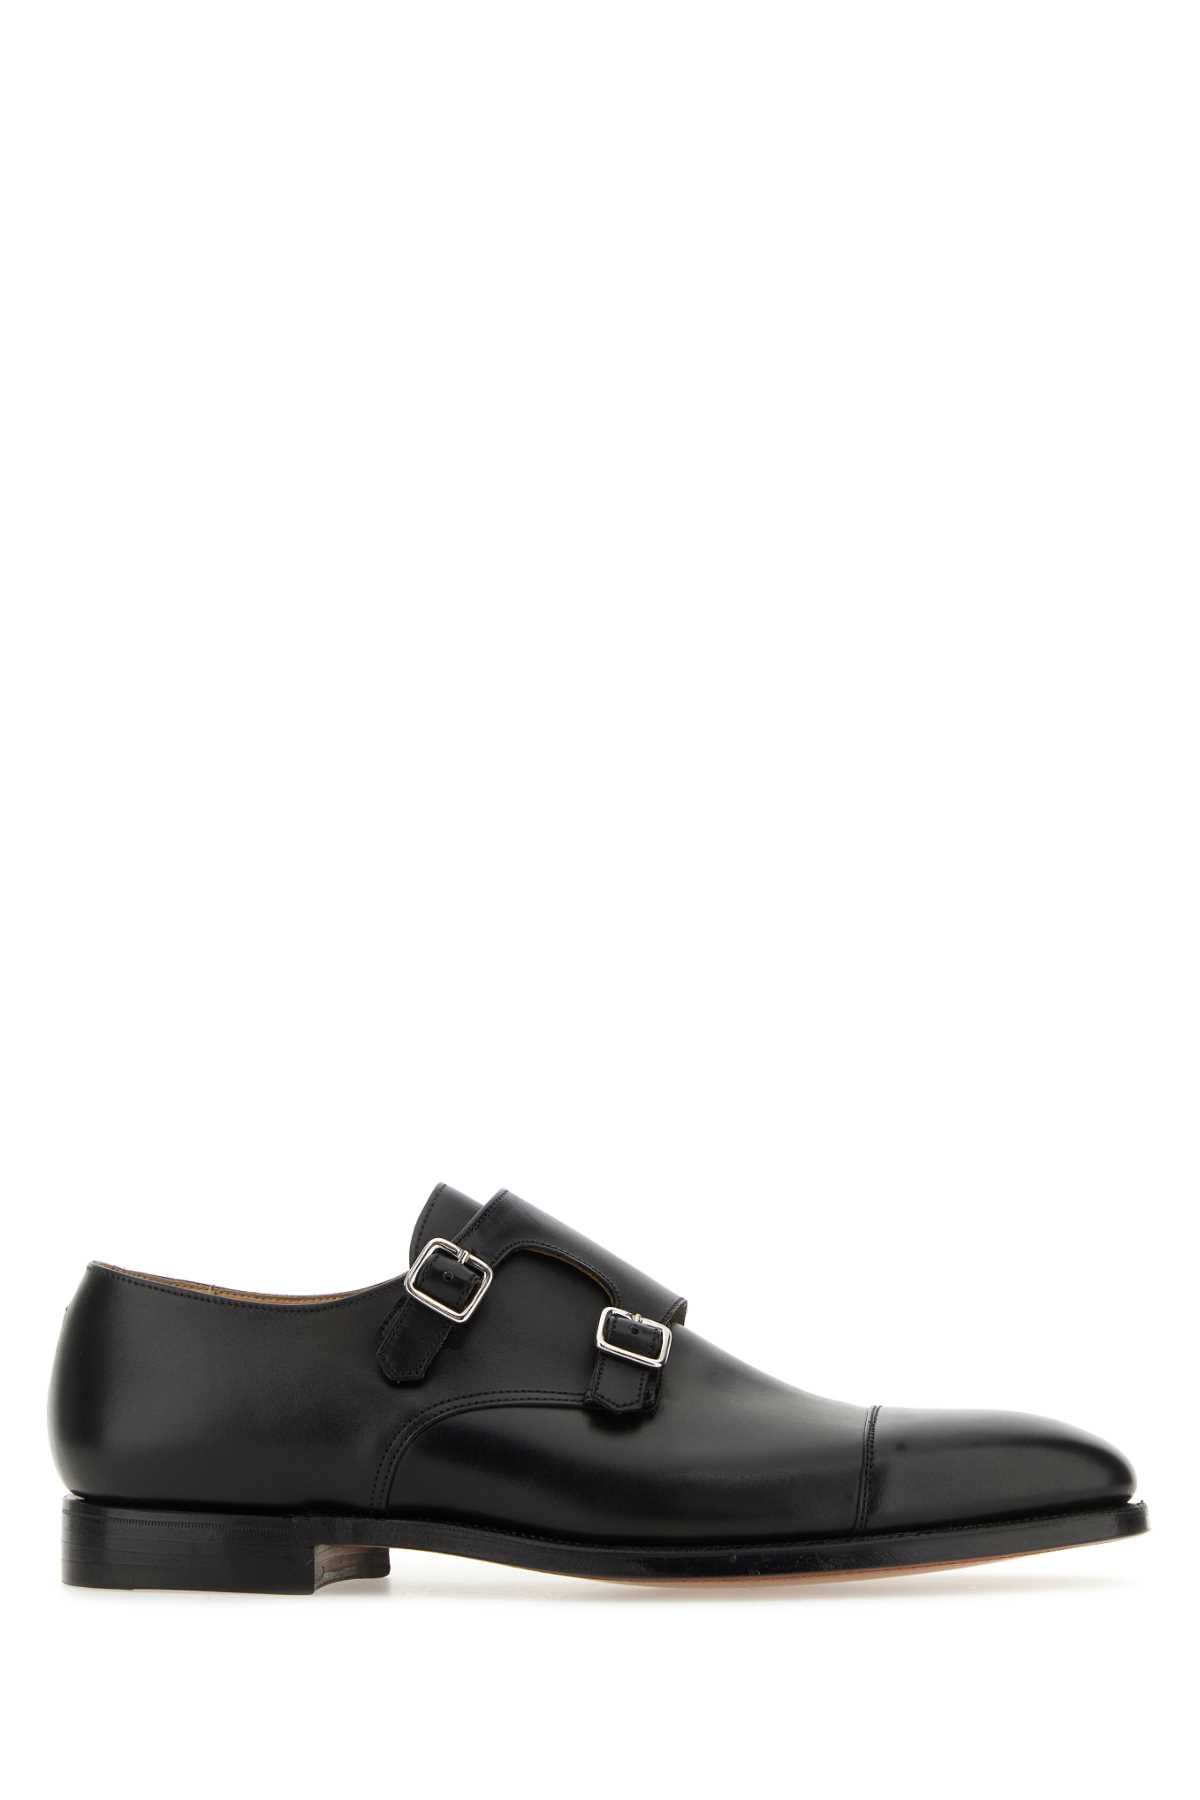 Black Leather Lowndes Monk Strap Shoes